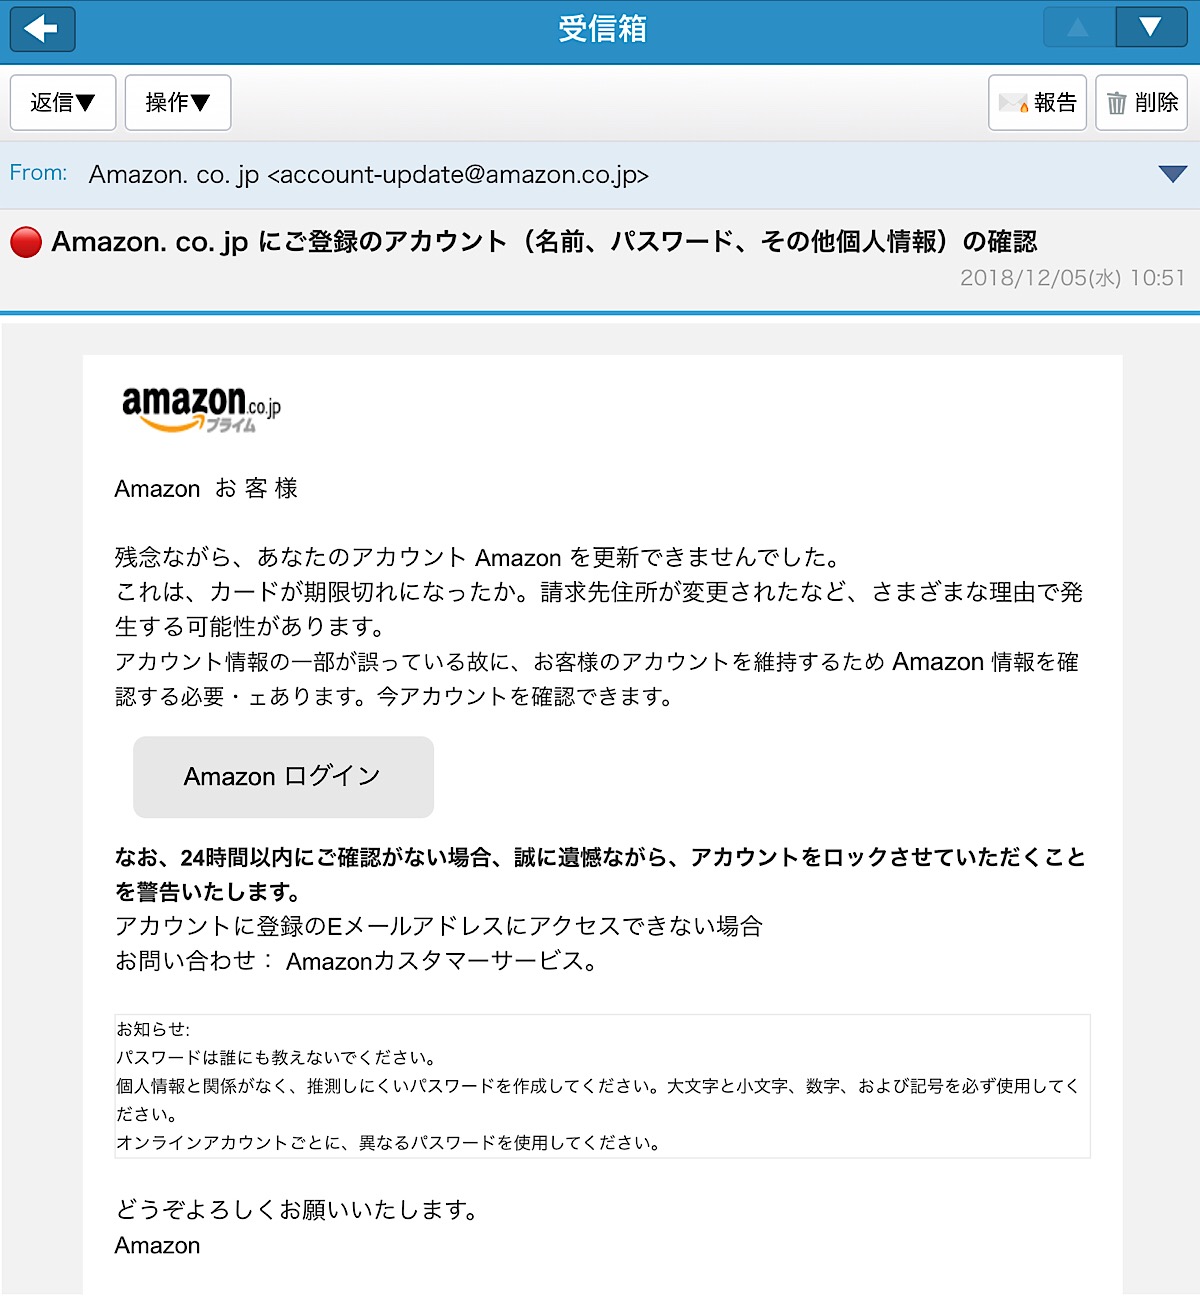 Amazon. co. jp にご登録のアカウント（名前、パスワード、その他個人情報）の確認